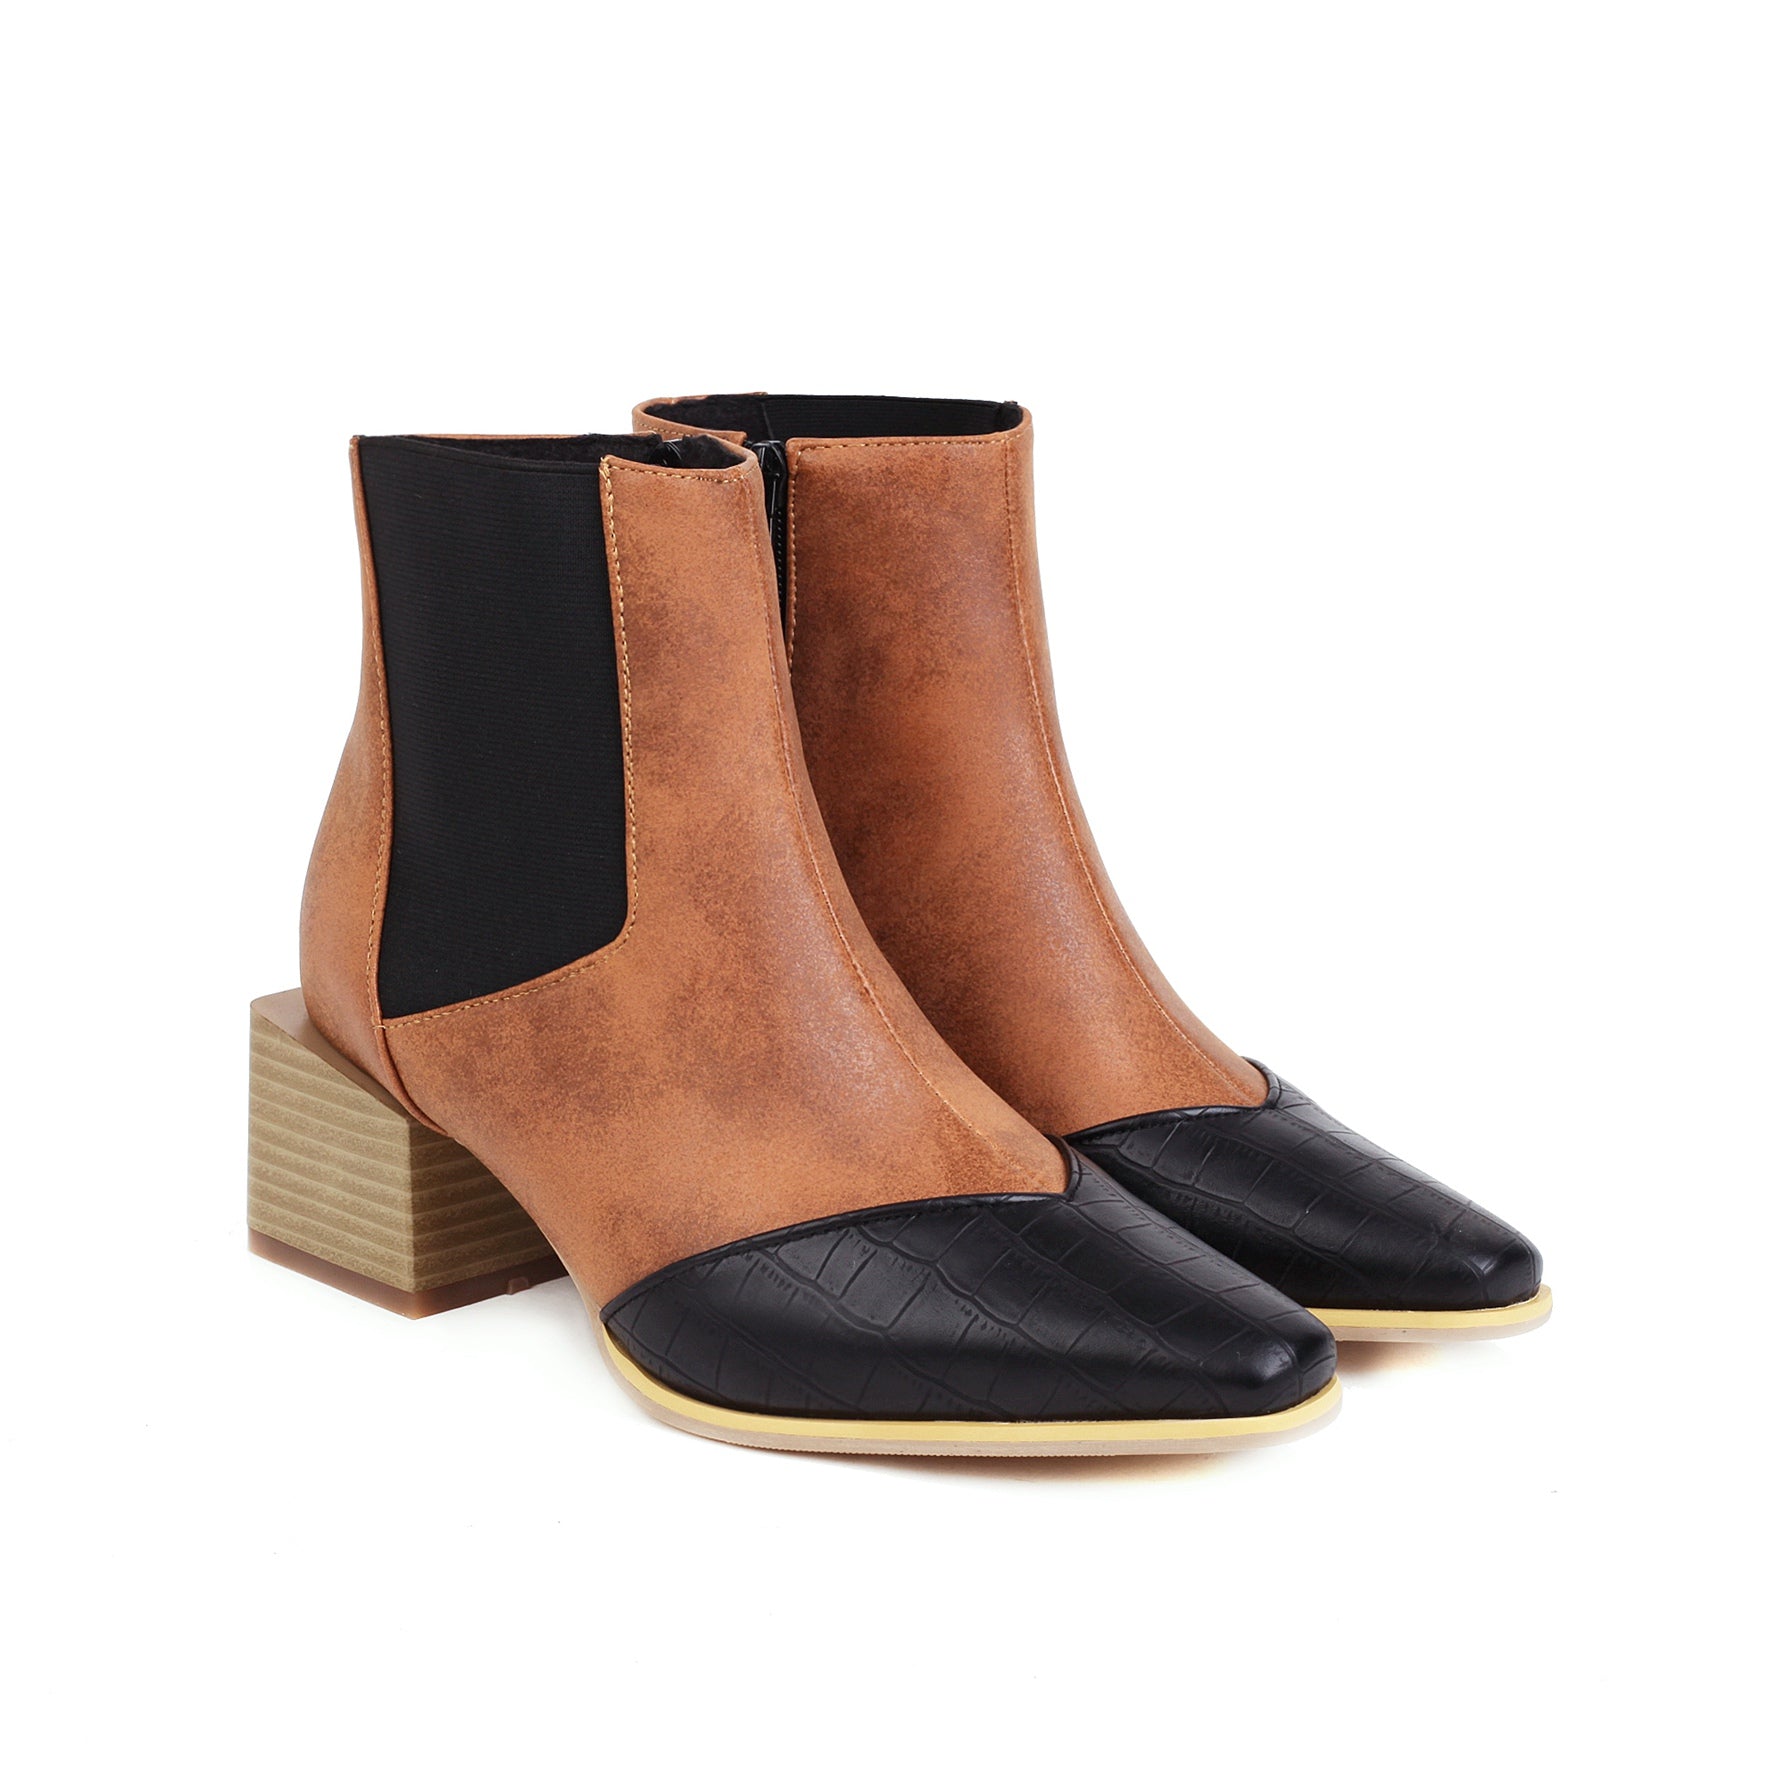 Bigsizeheels Elastic square heel ankle boots - Dark brown freeshipping - bigsizeheel®-size5-size15 -All Plus Sizes Available!